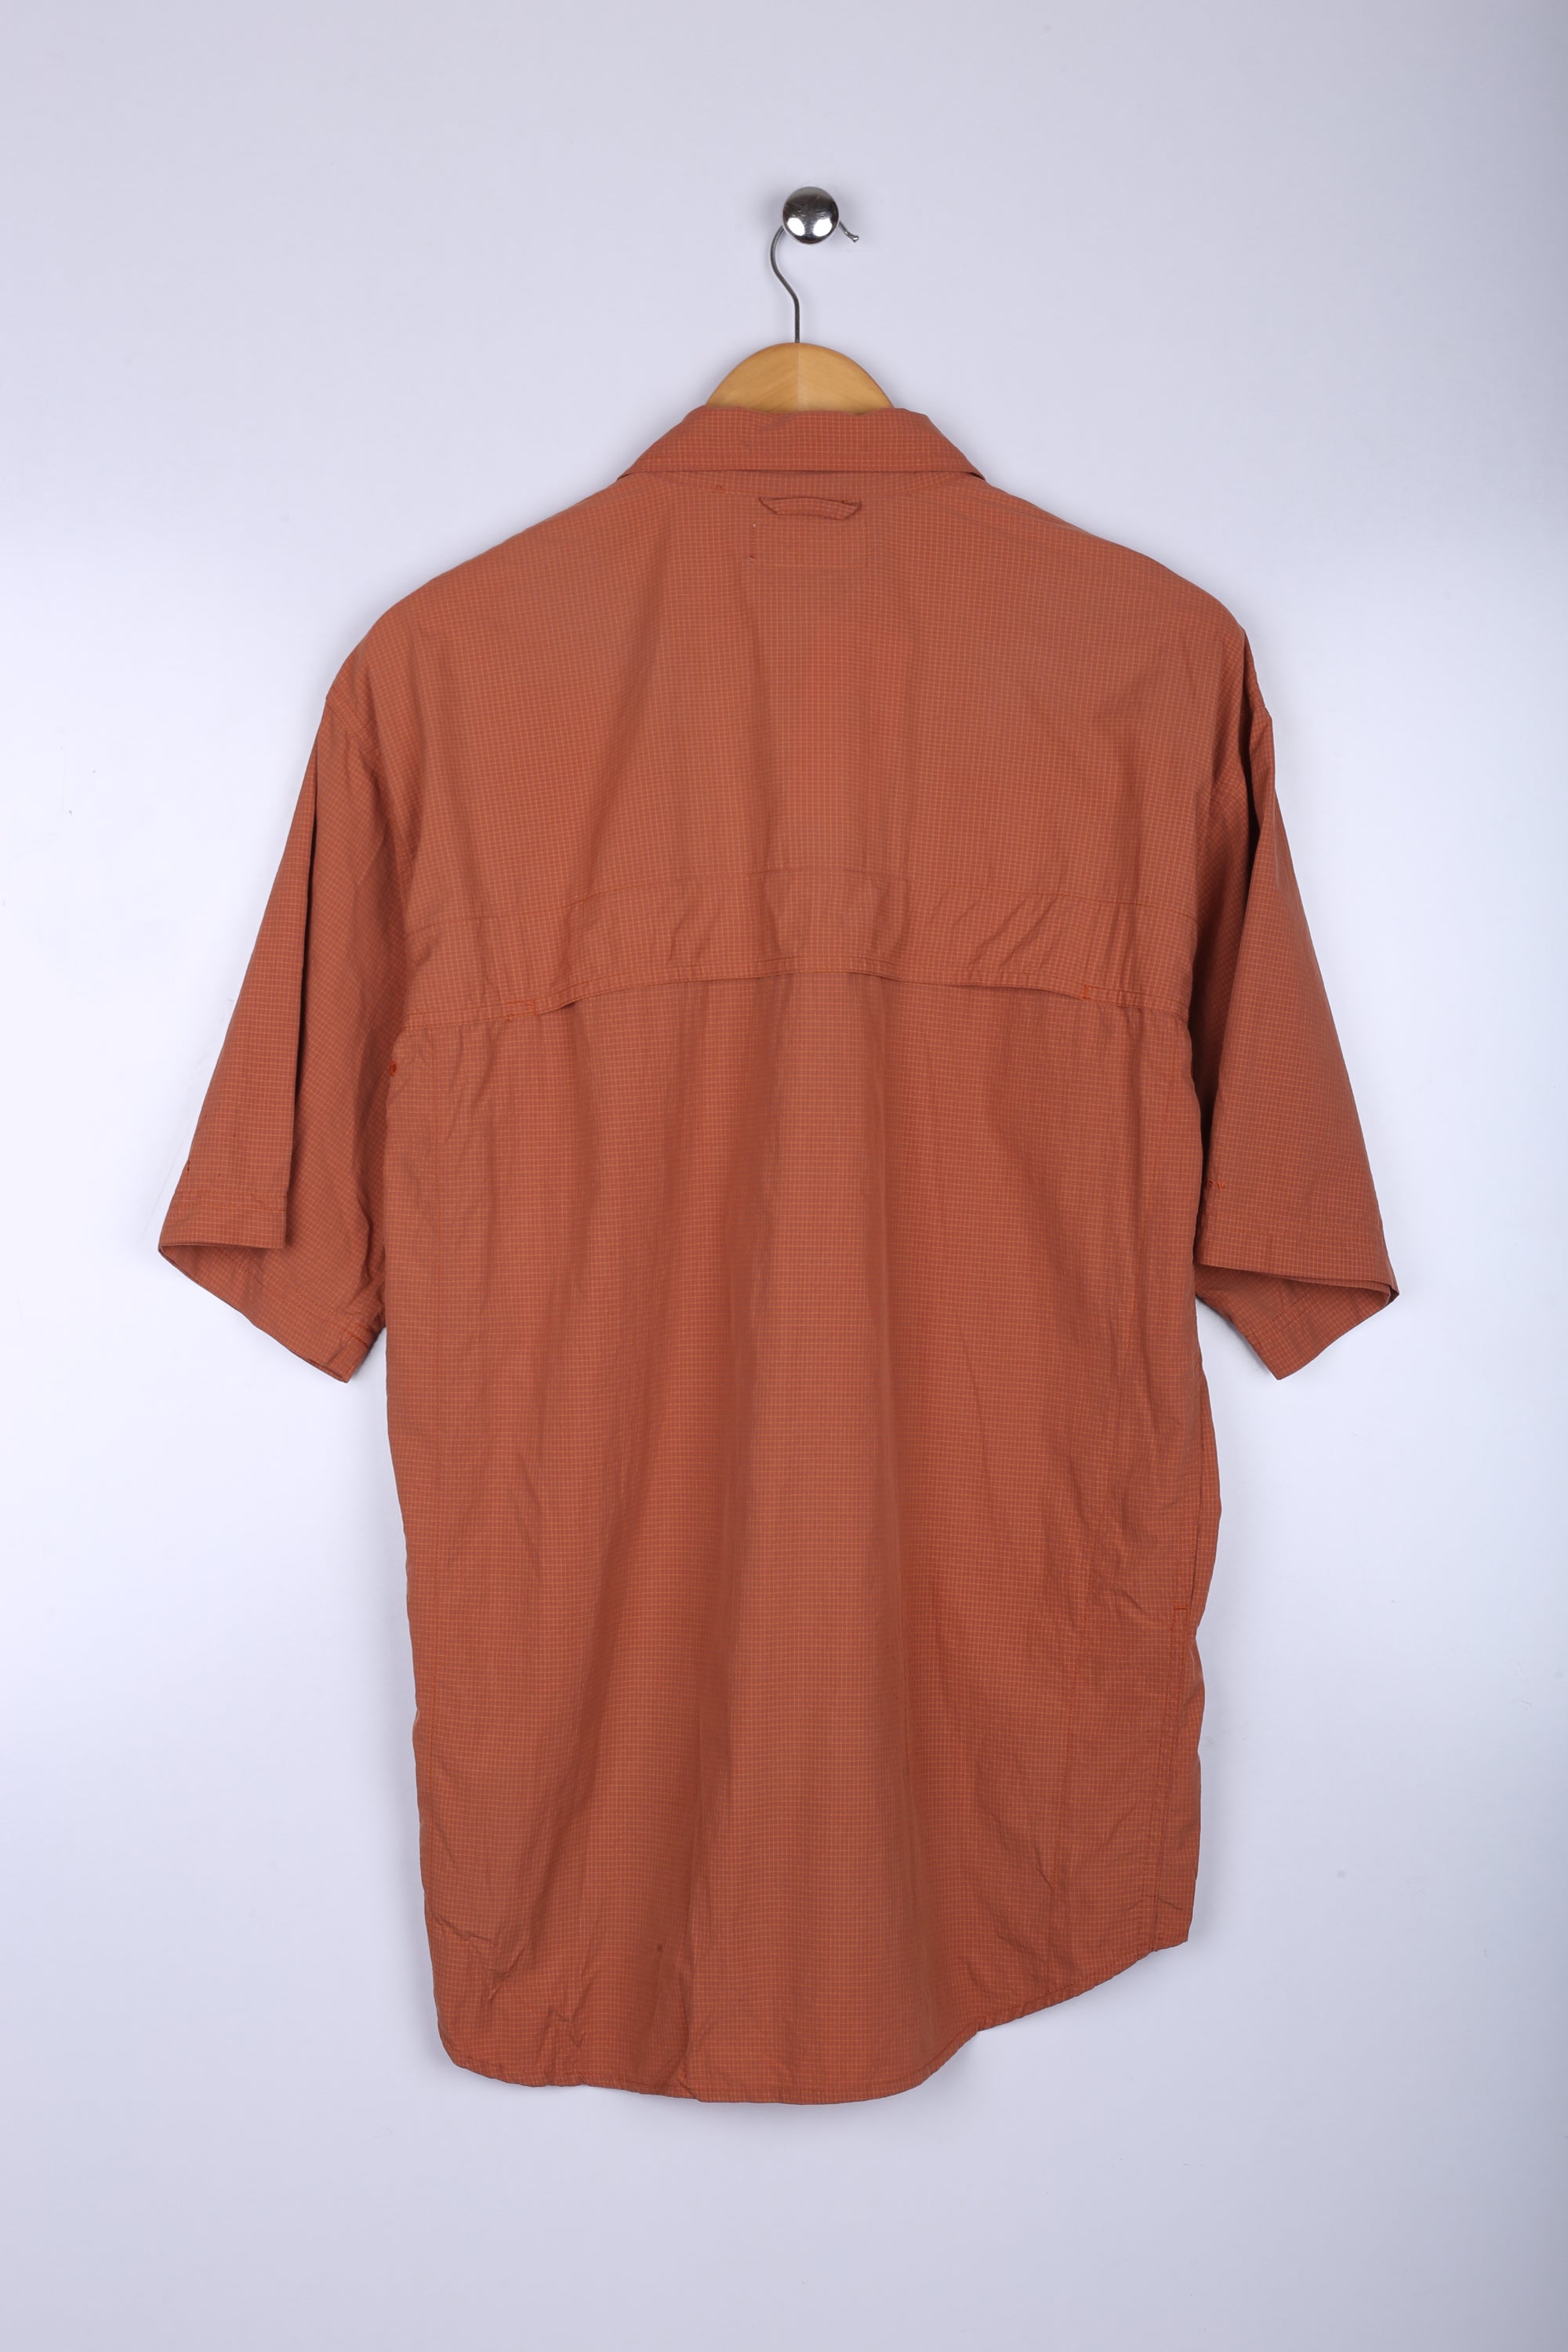 Vintage Columbia Half Sleeve Shirt Burgundy